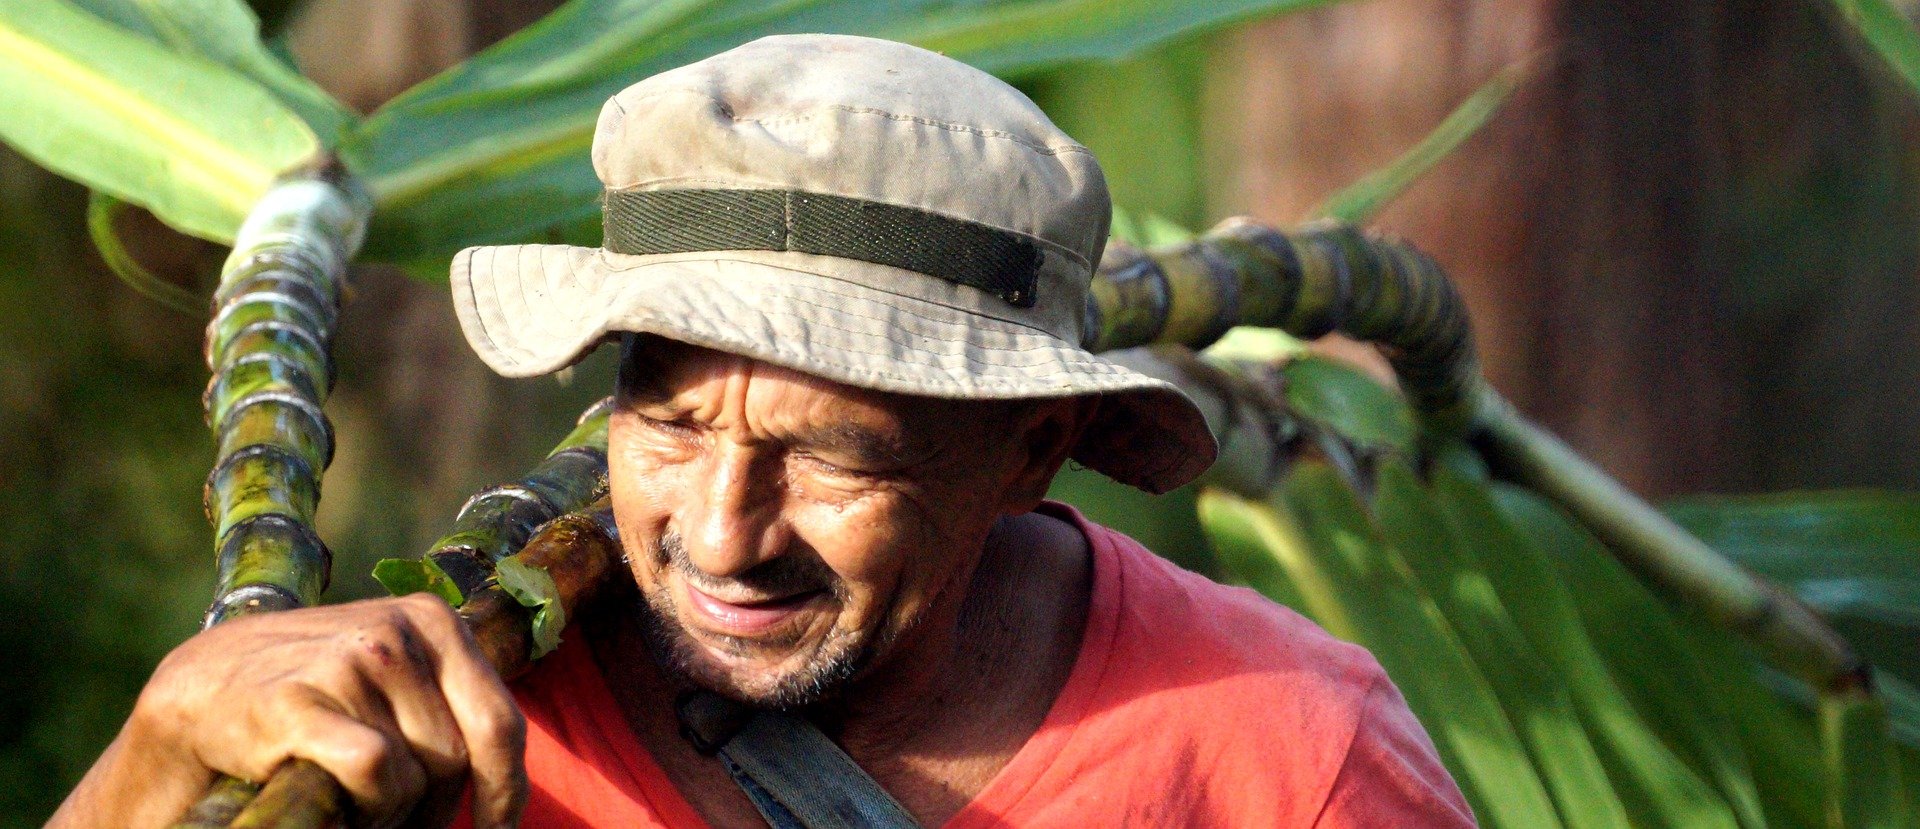 Hombre campesino cargando en el hombro caña de azúcar